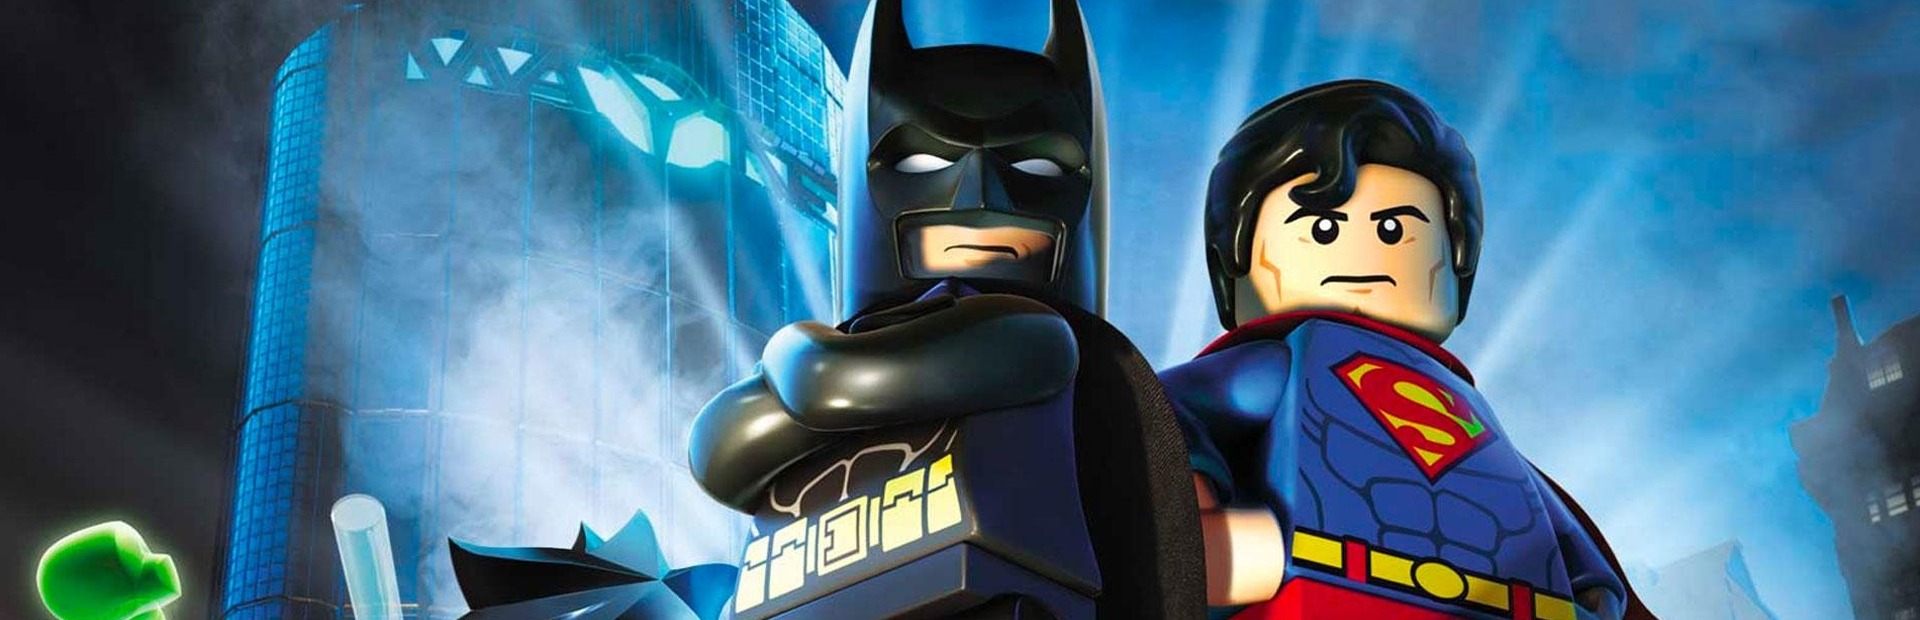 LEGO Batman Trilogy Steam